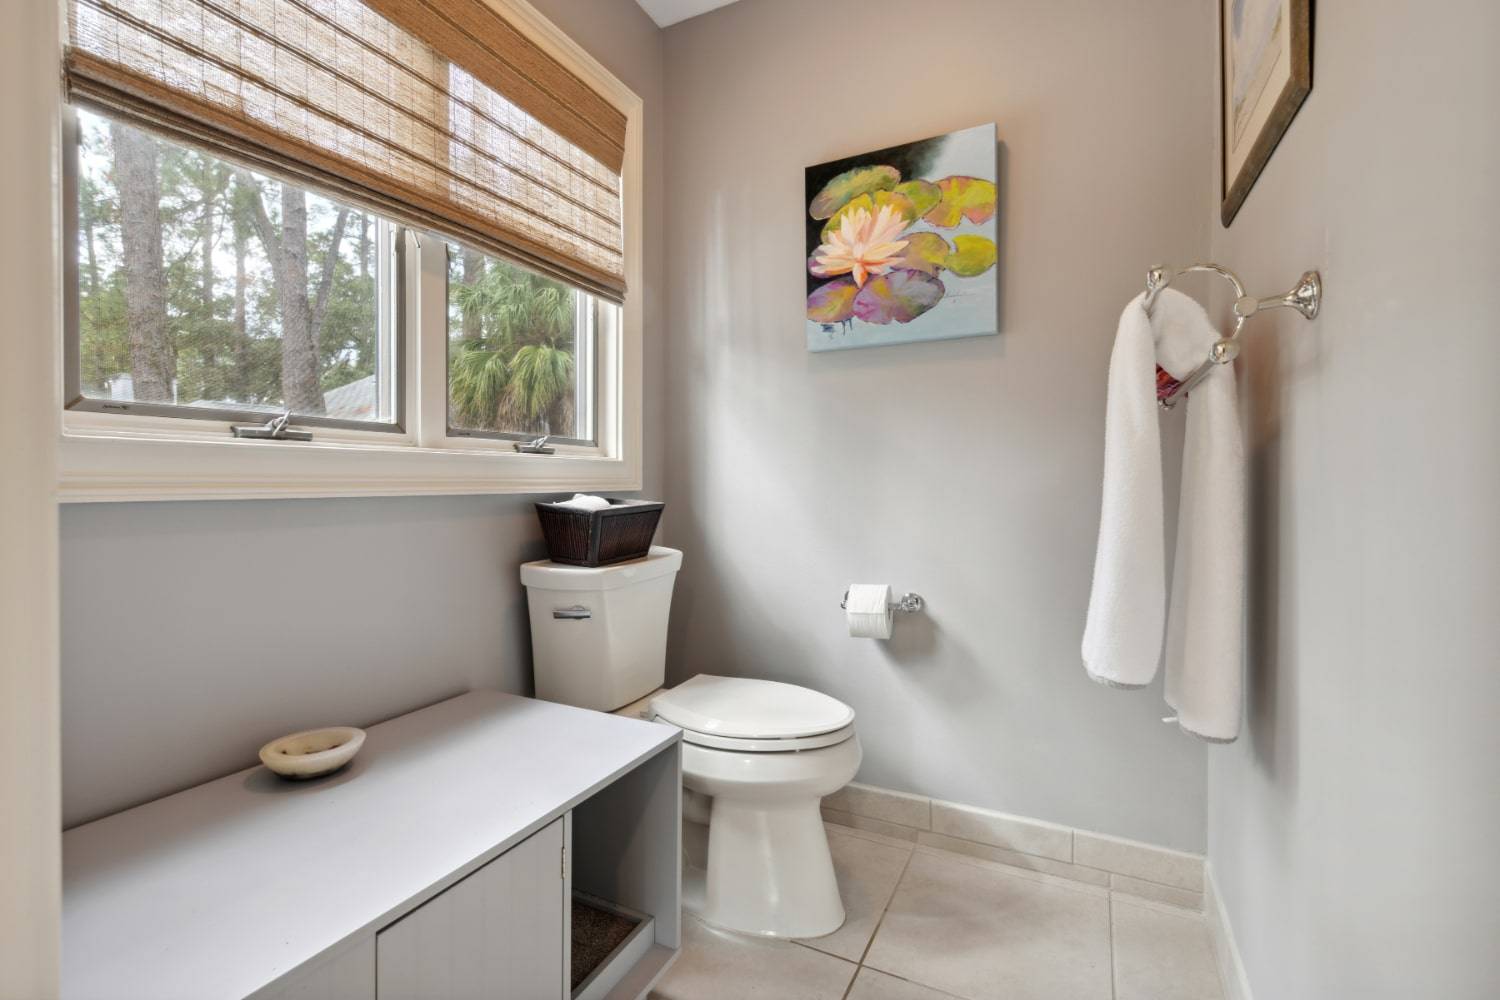 Winslow Design Studio is the Hilton Head Island leader in custom bathroom remodeling